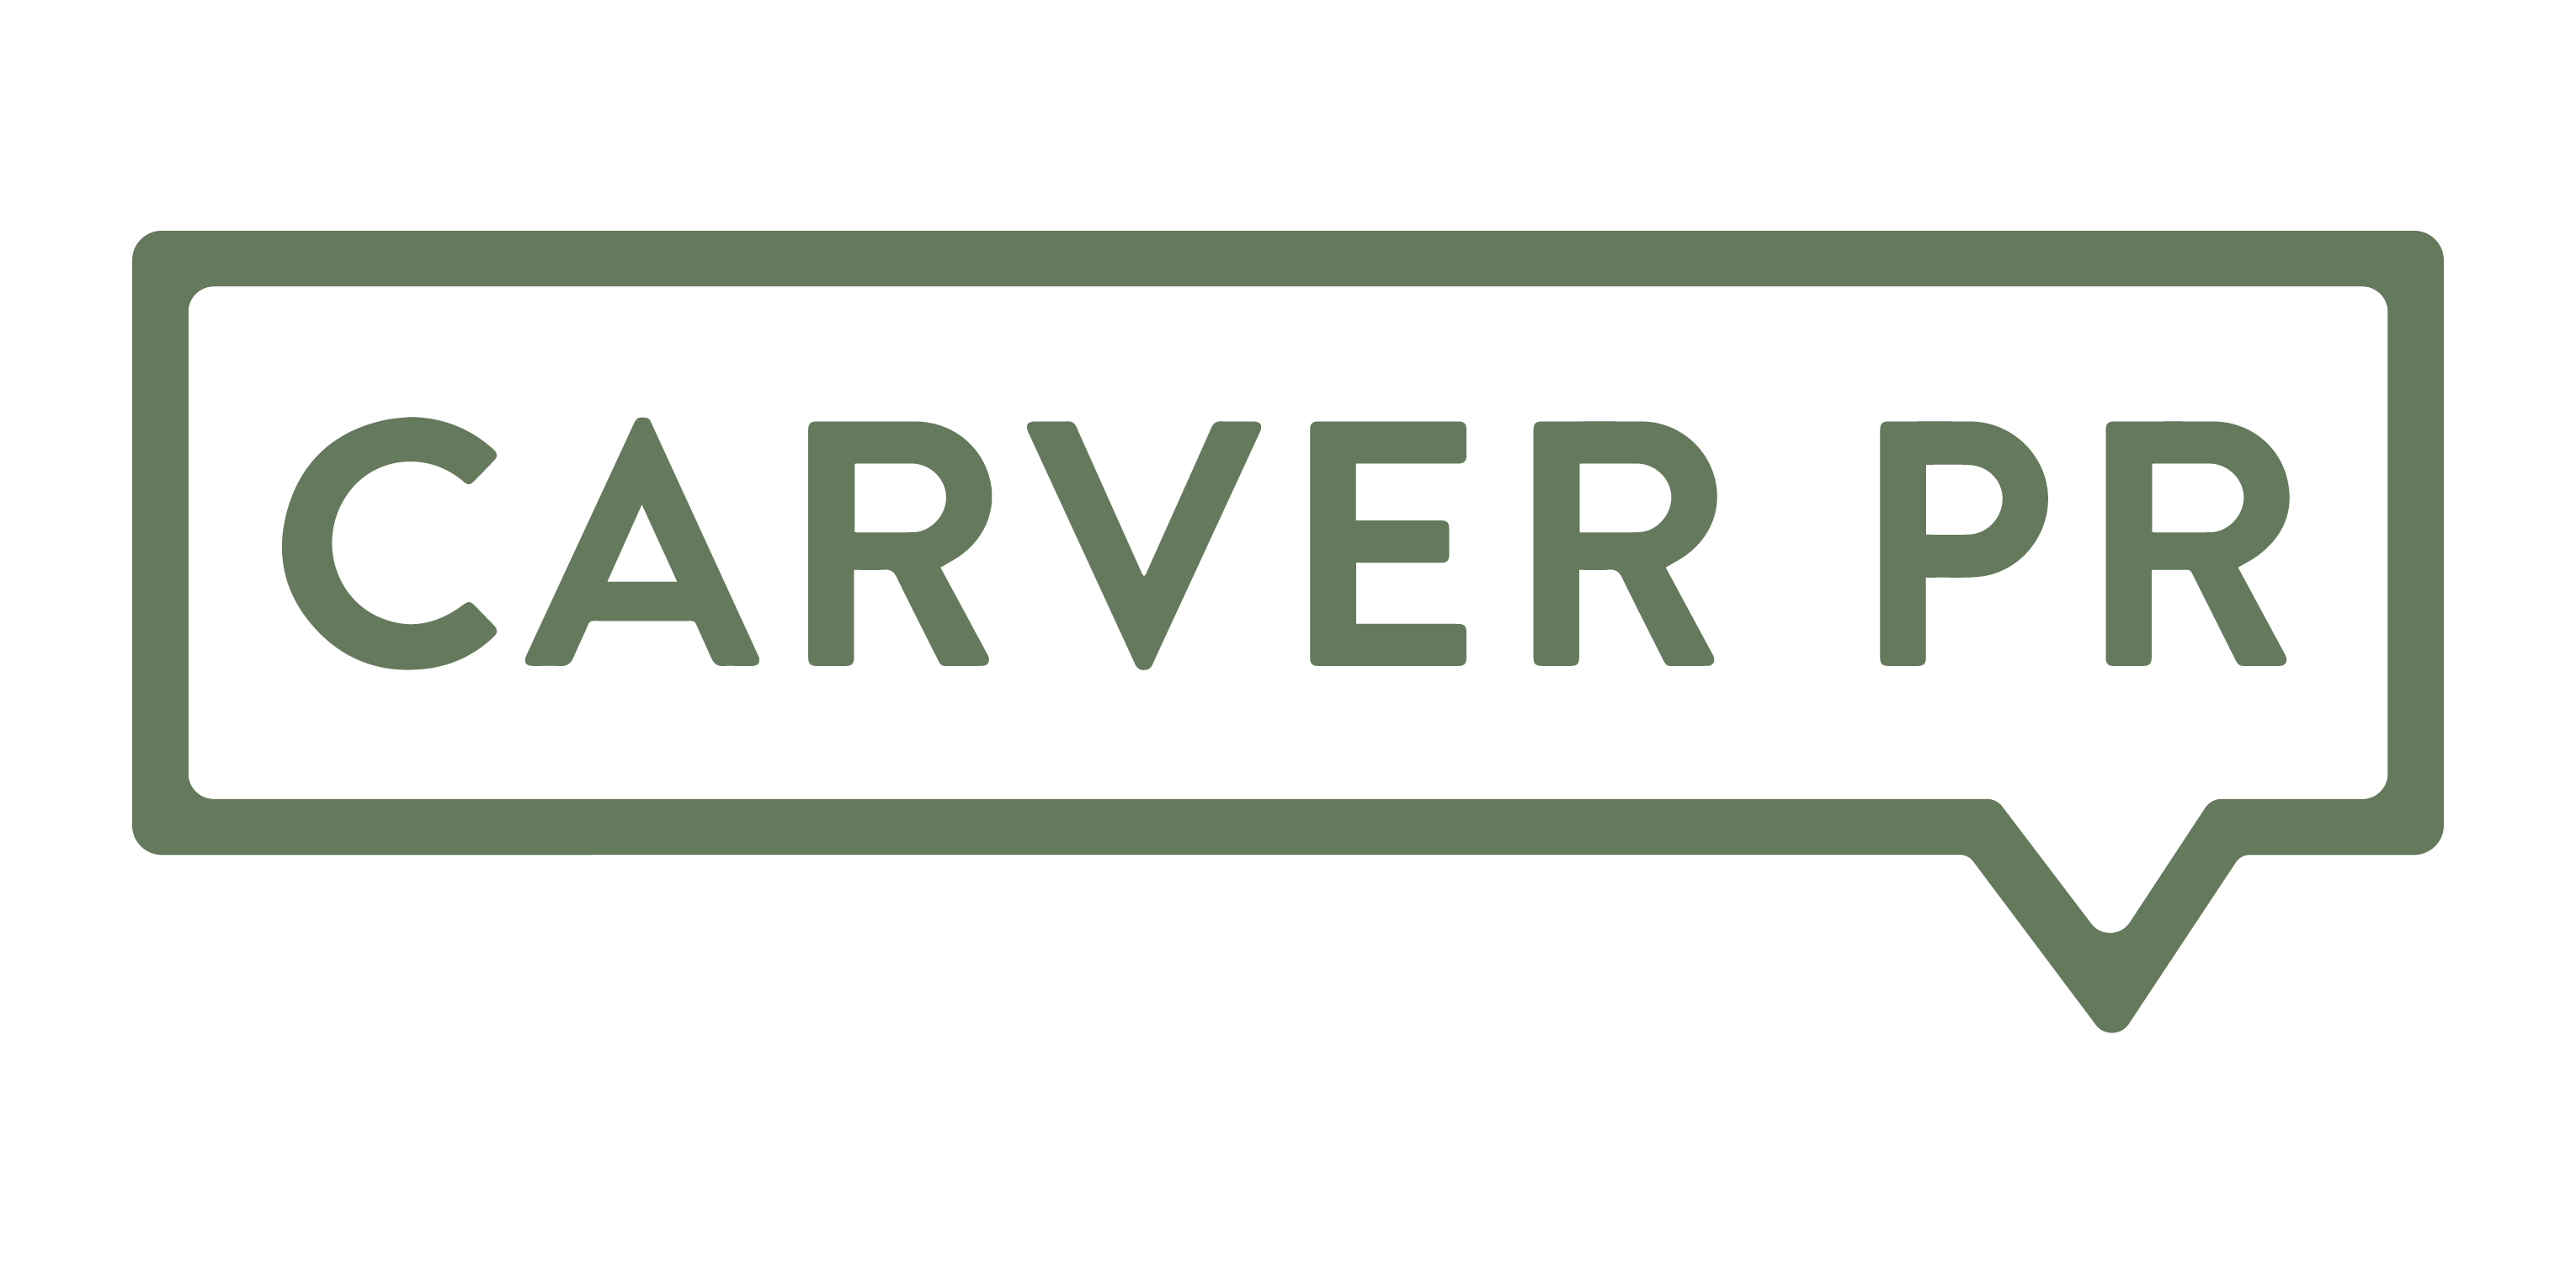 Carver PR